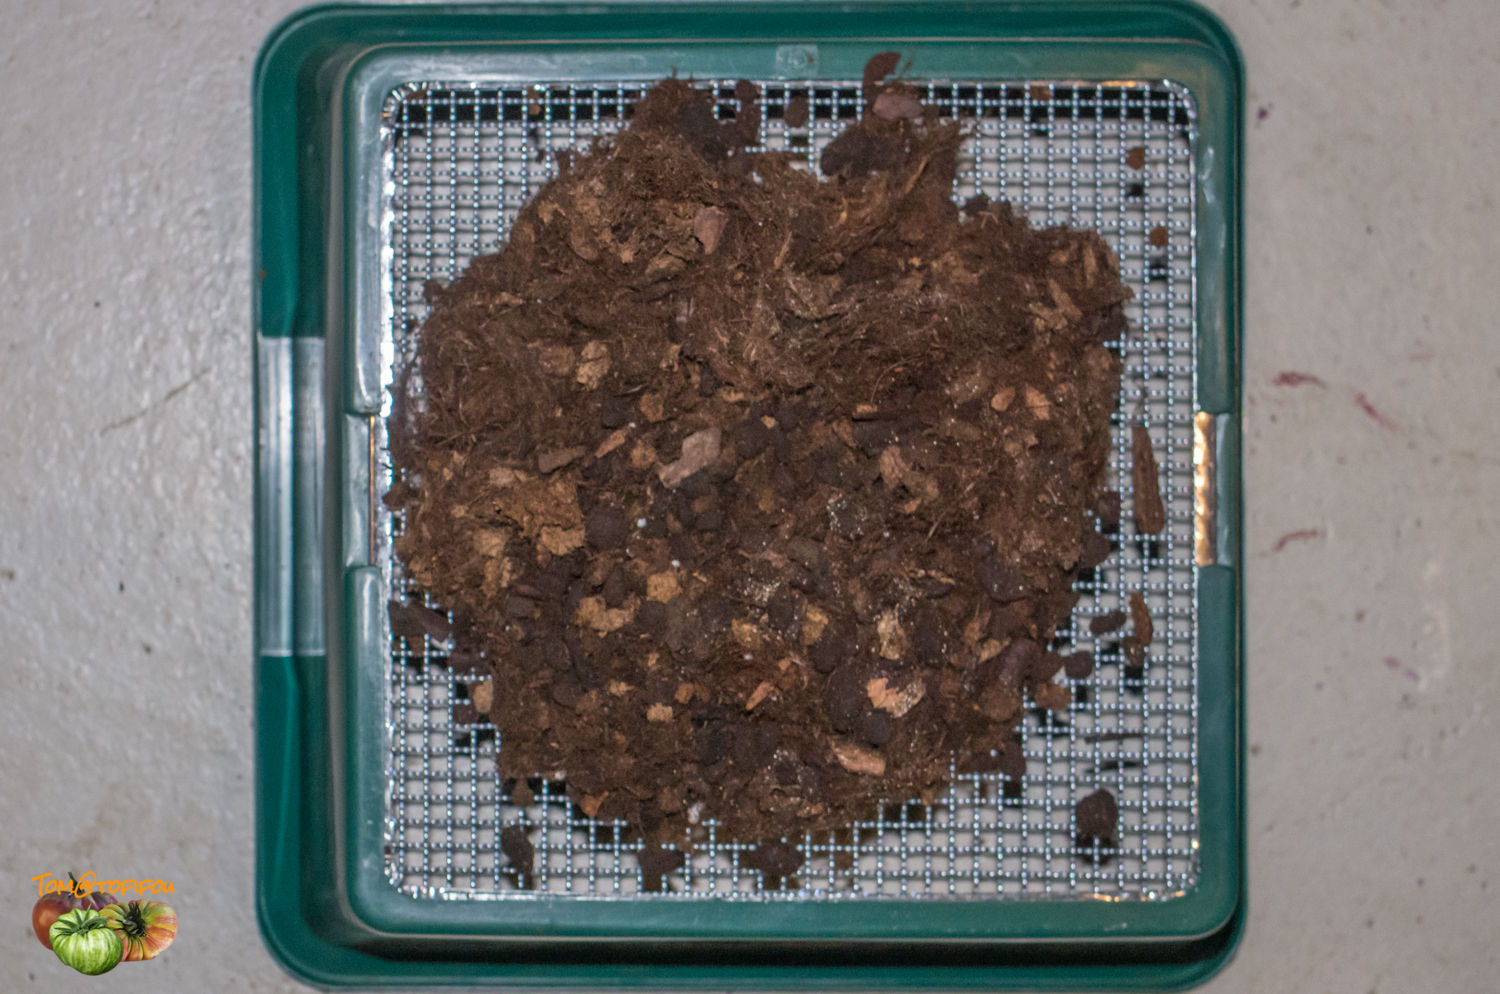 compost sieve waste 17 January 2019 4